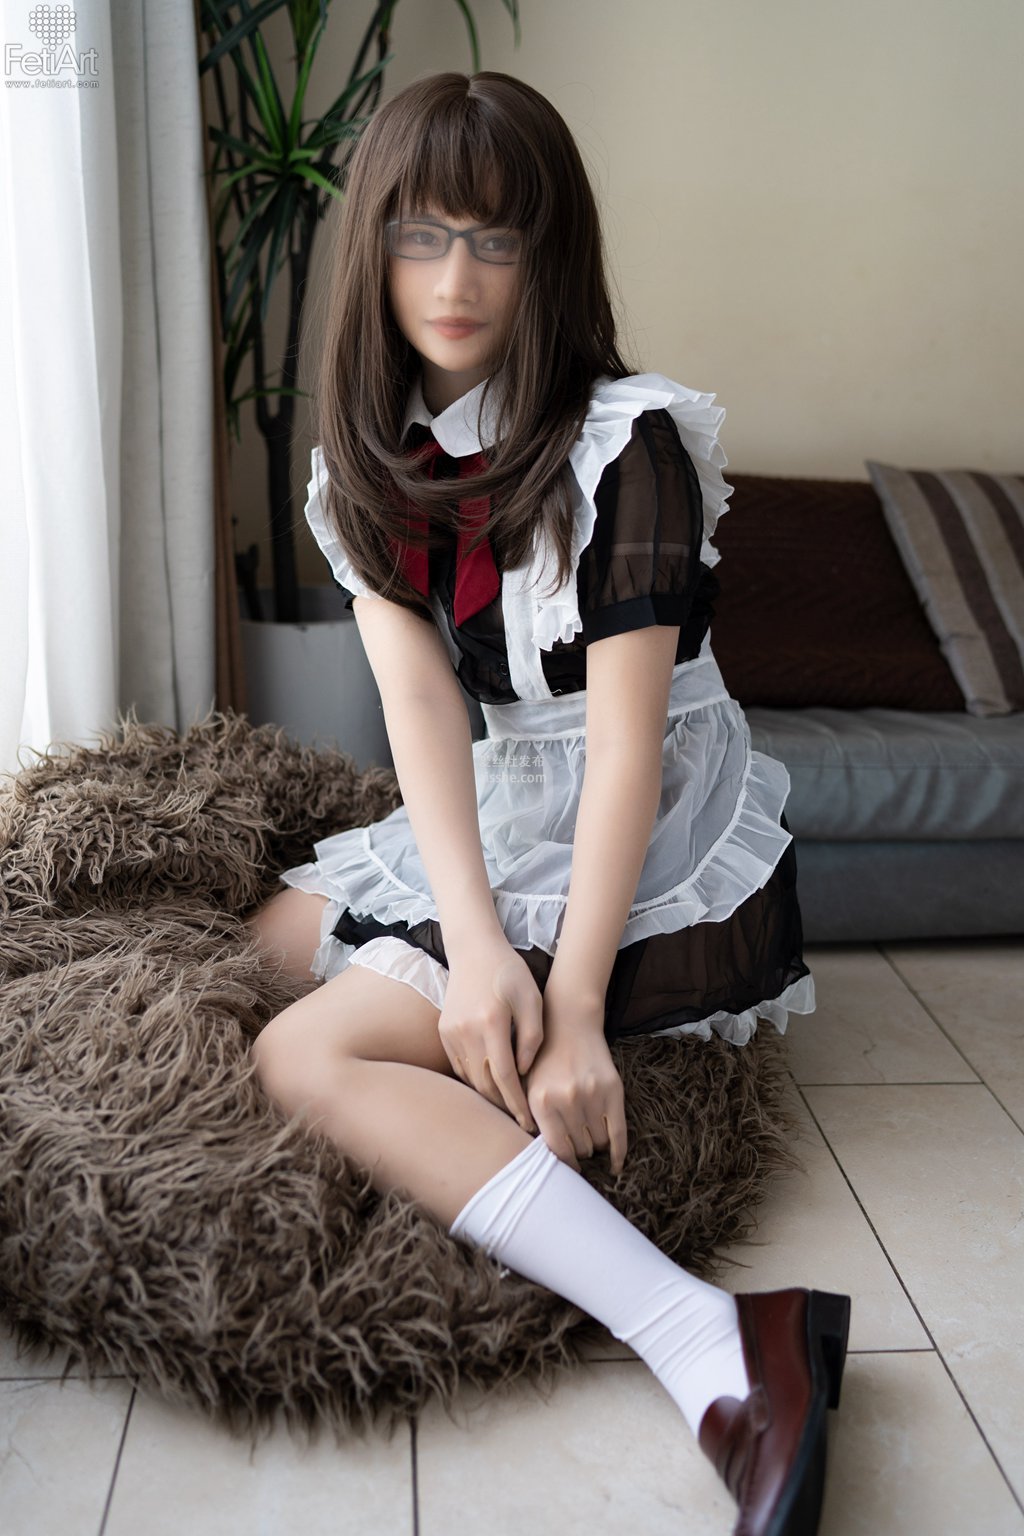 [FetiArt] No.048 Pantyhose Encasement Maid 模特 Jasmine